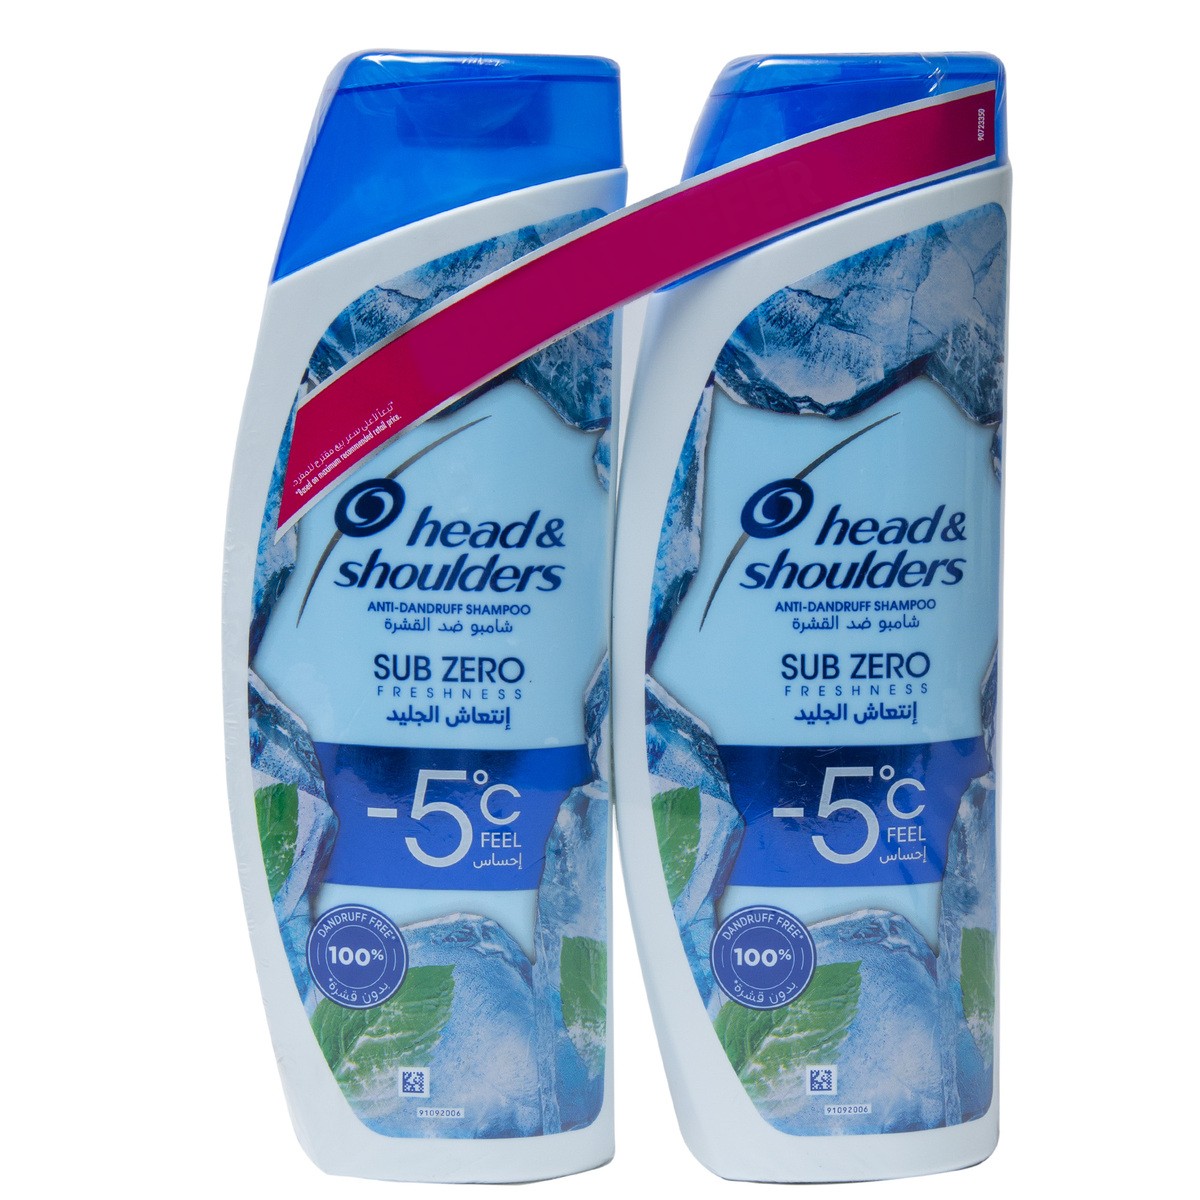 Head & Shoulders Anti-Dandruff Shampoo Sub Zero Freshness 2 x 400ml